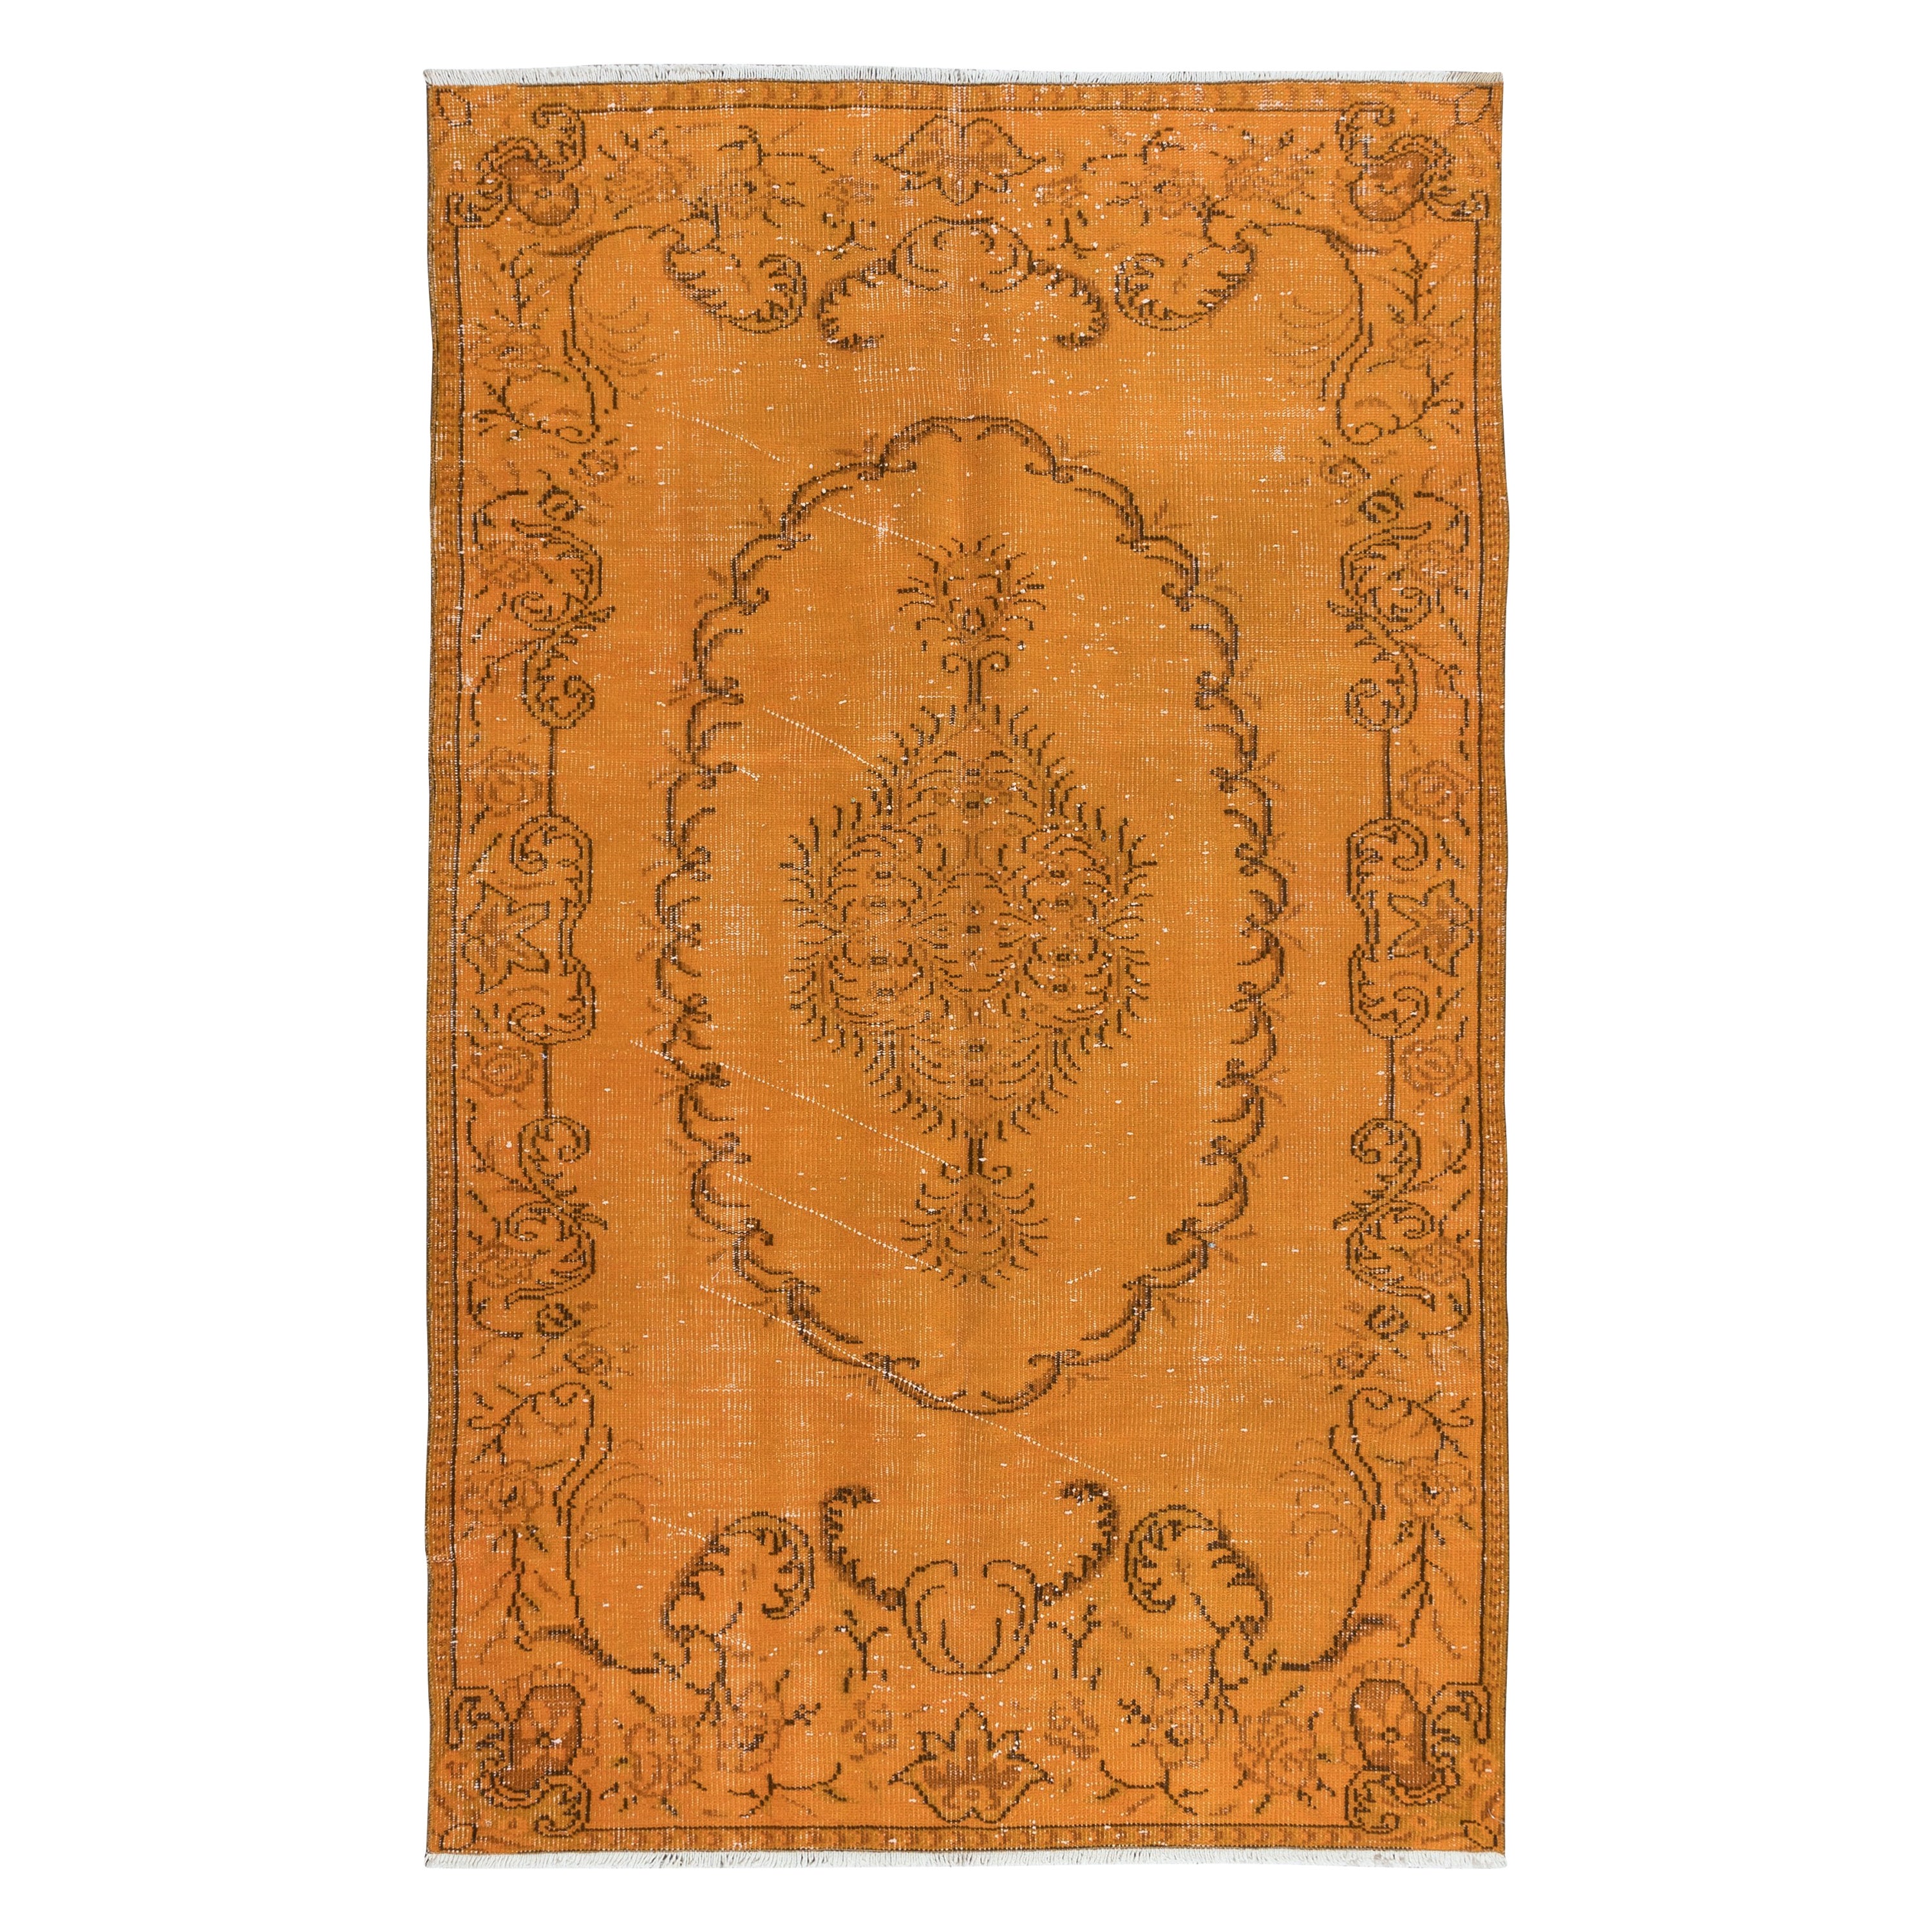 5x8 Ft Orange Handmade Turkish Area Rug, Bohem Eclectic Room Size Carpet